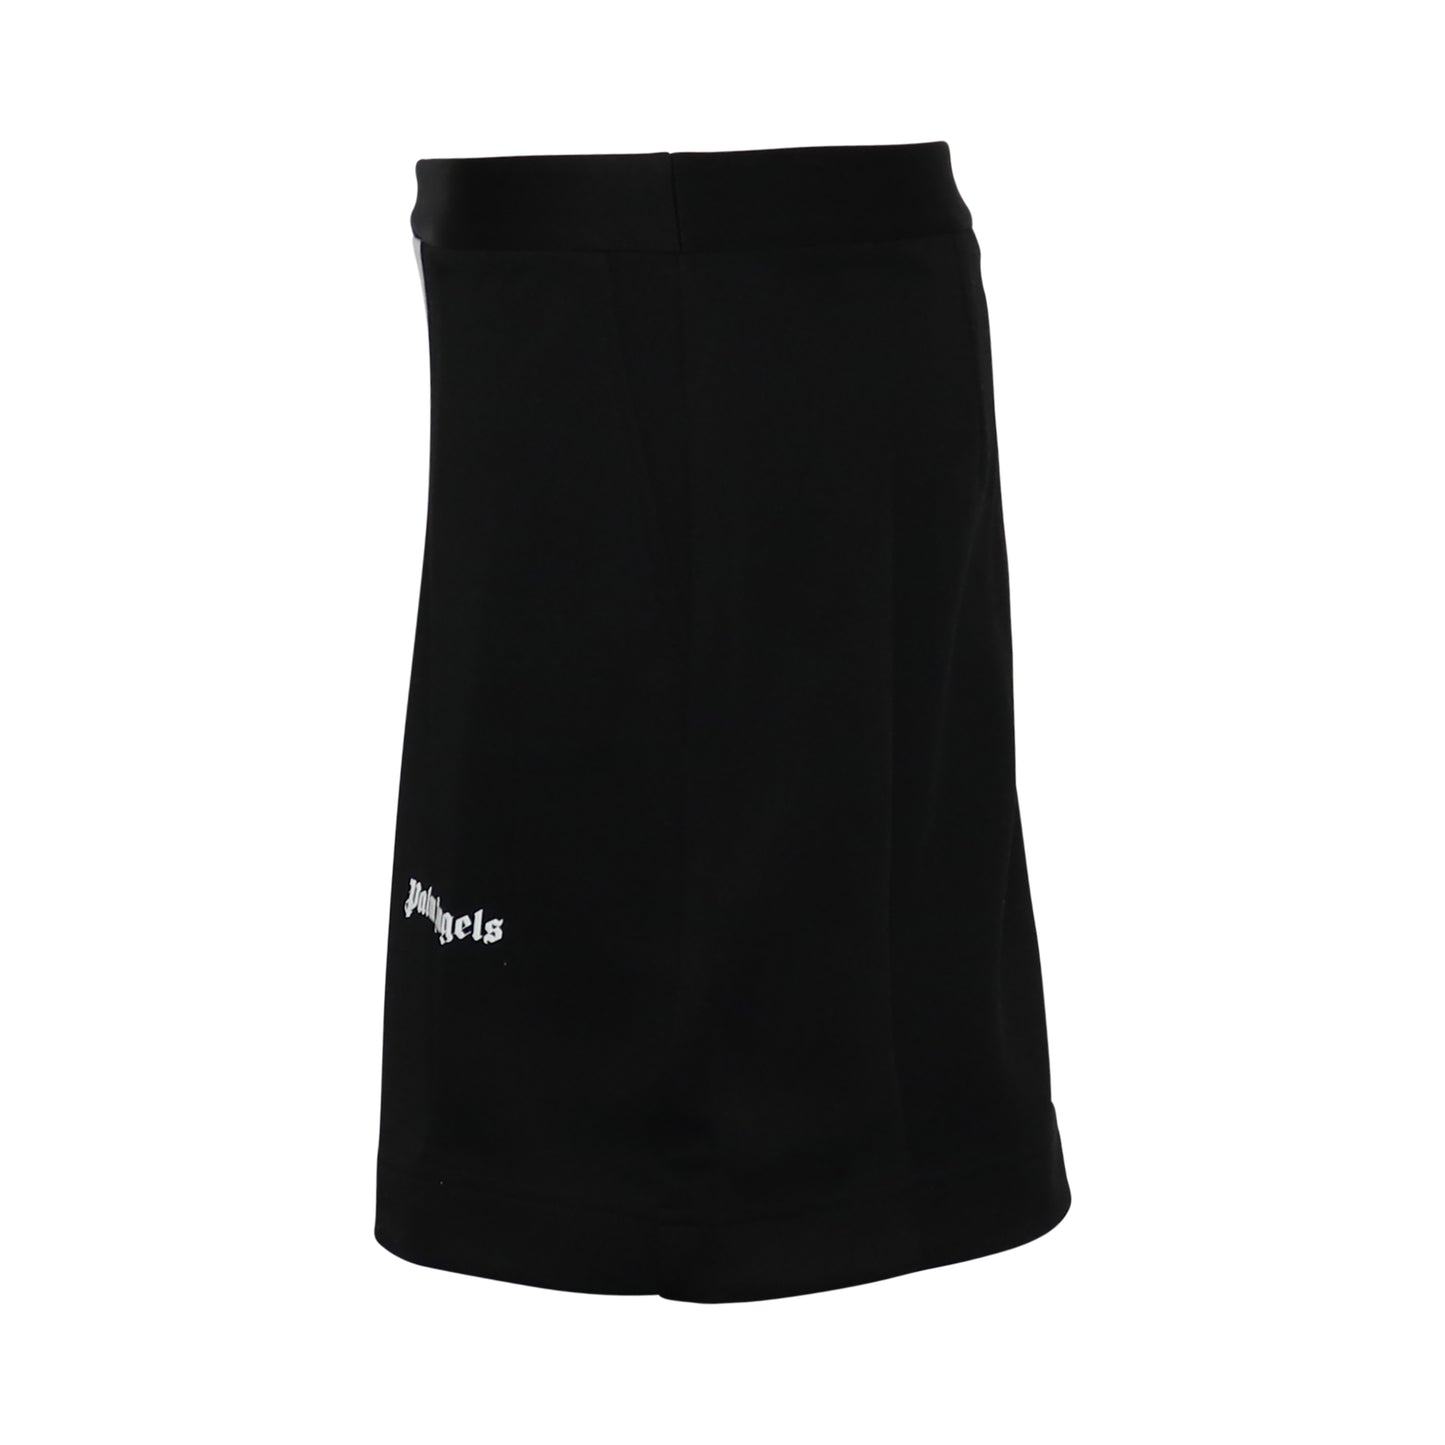 Track Mini Skirt in Black